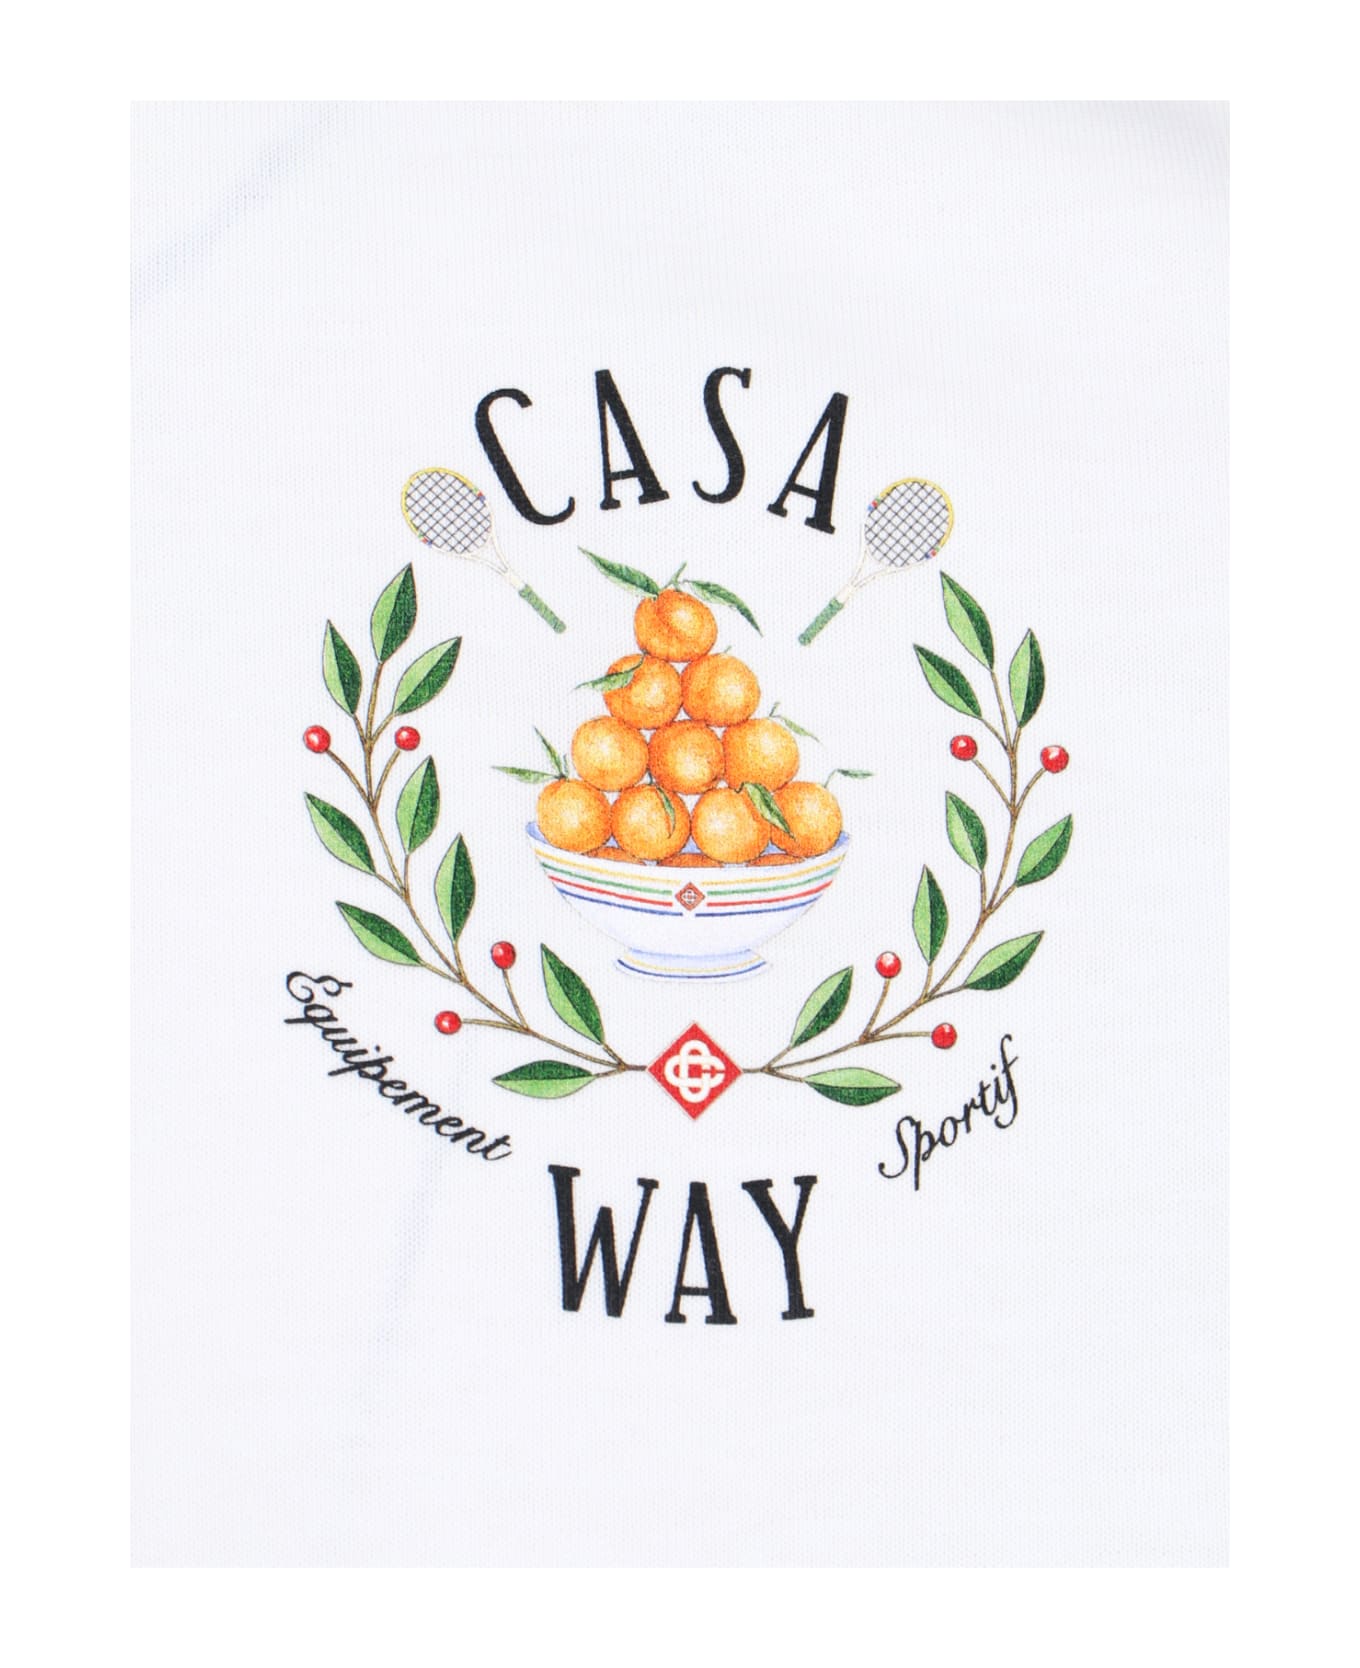 Casablanca 'casa Way' Embroidery T-shirt - White